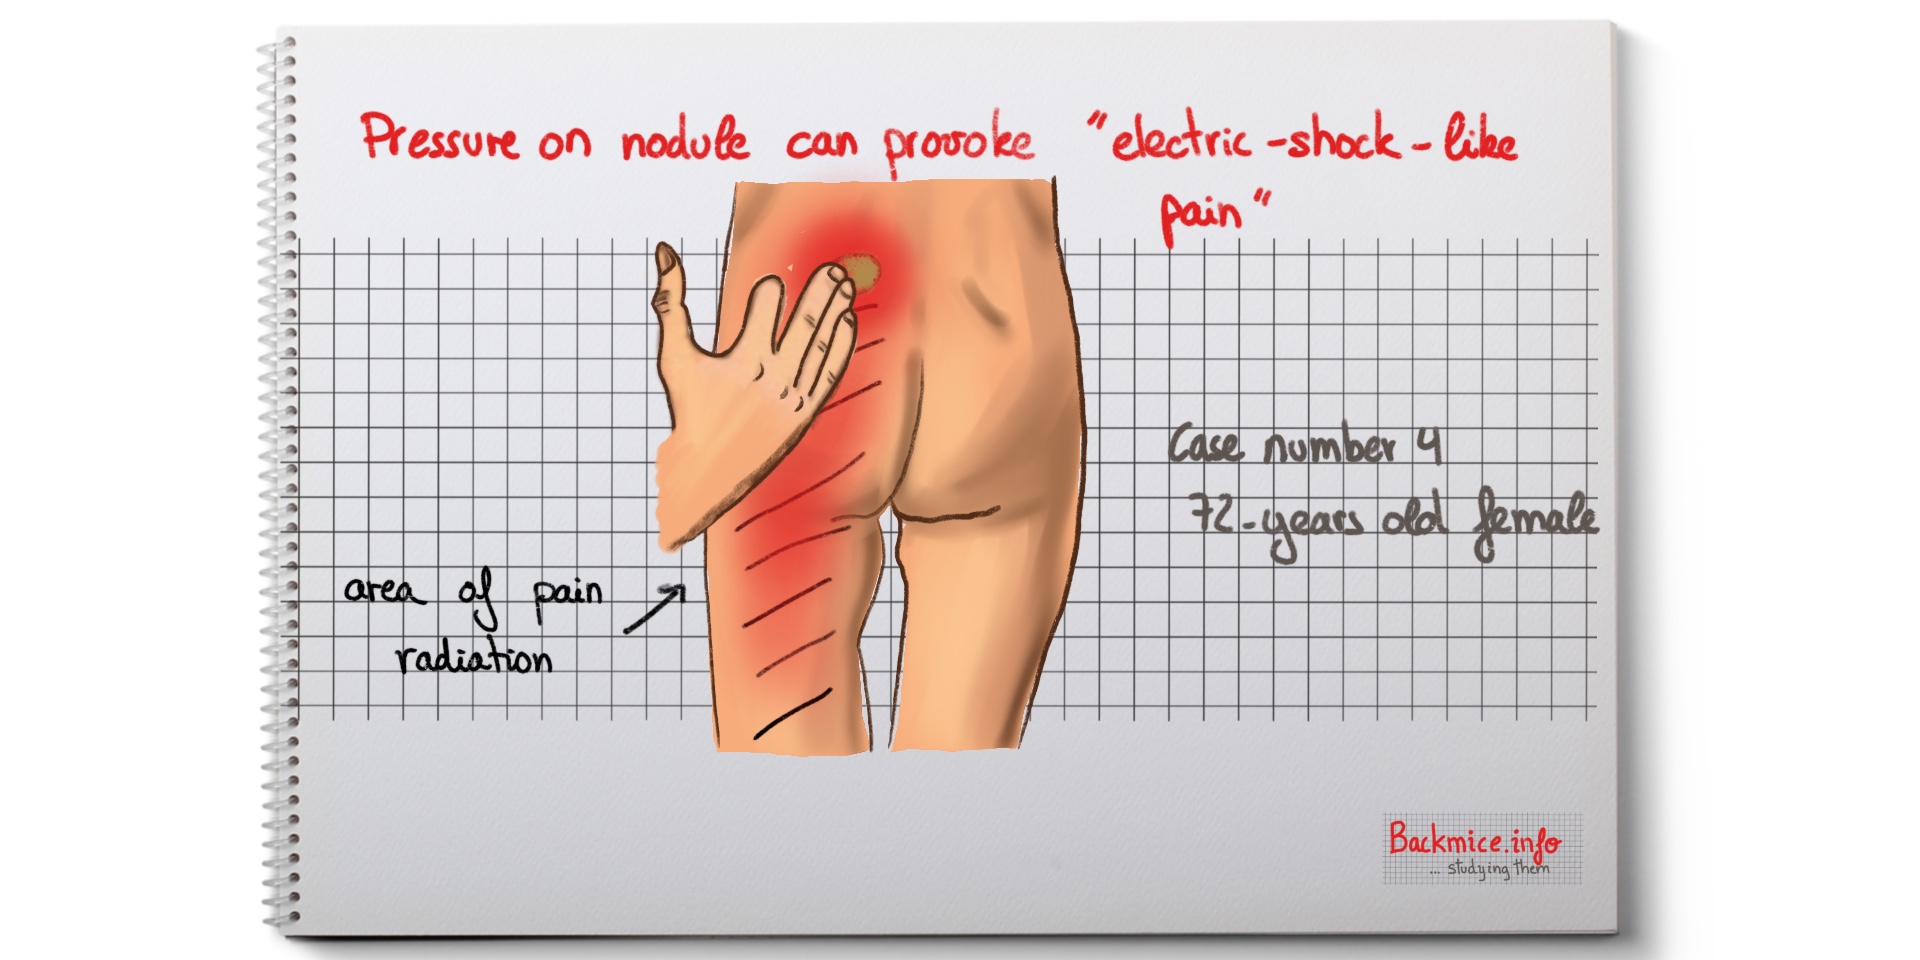 sacroiliac lipoma and low back pain (paplpation on the nodule)